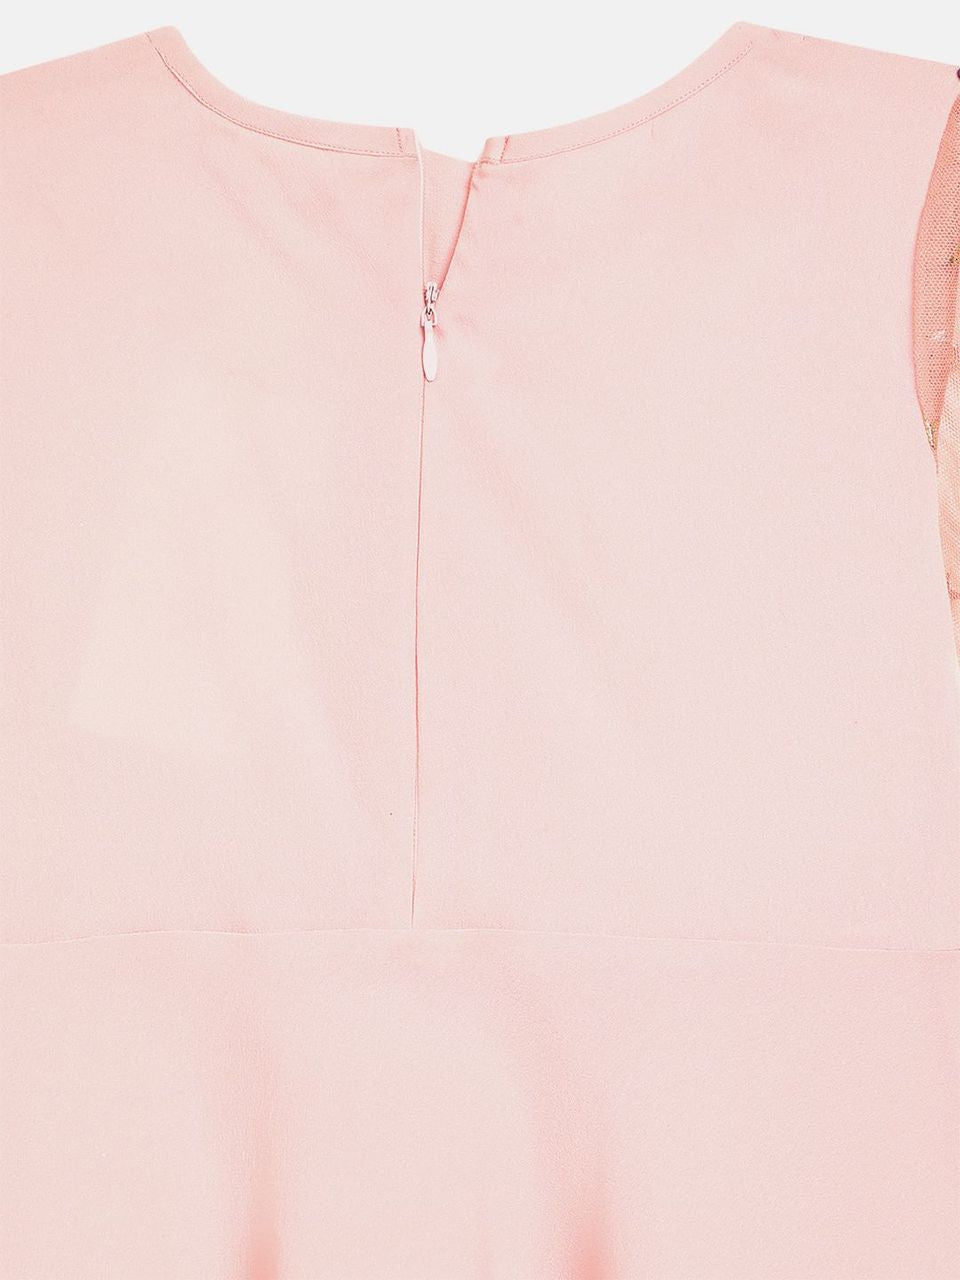 Pink Crepe & Net Foil Print Girls Dress